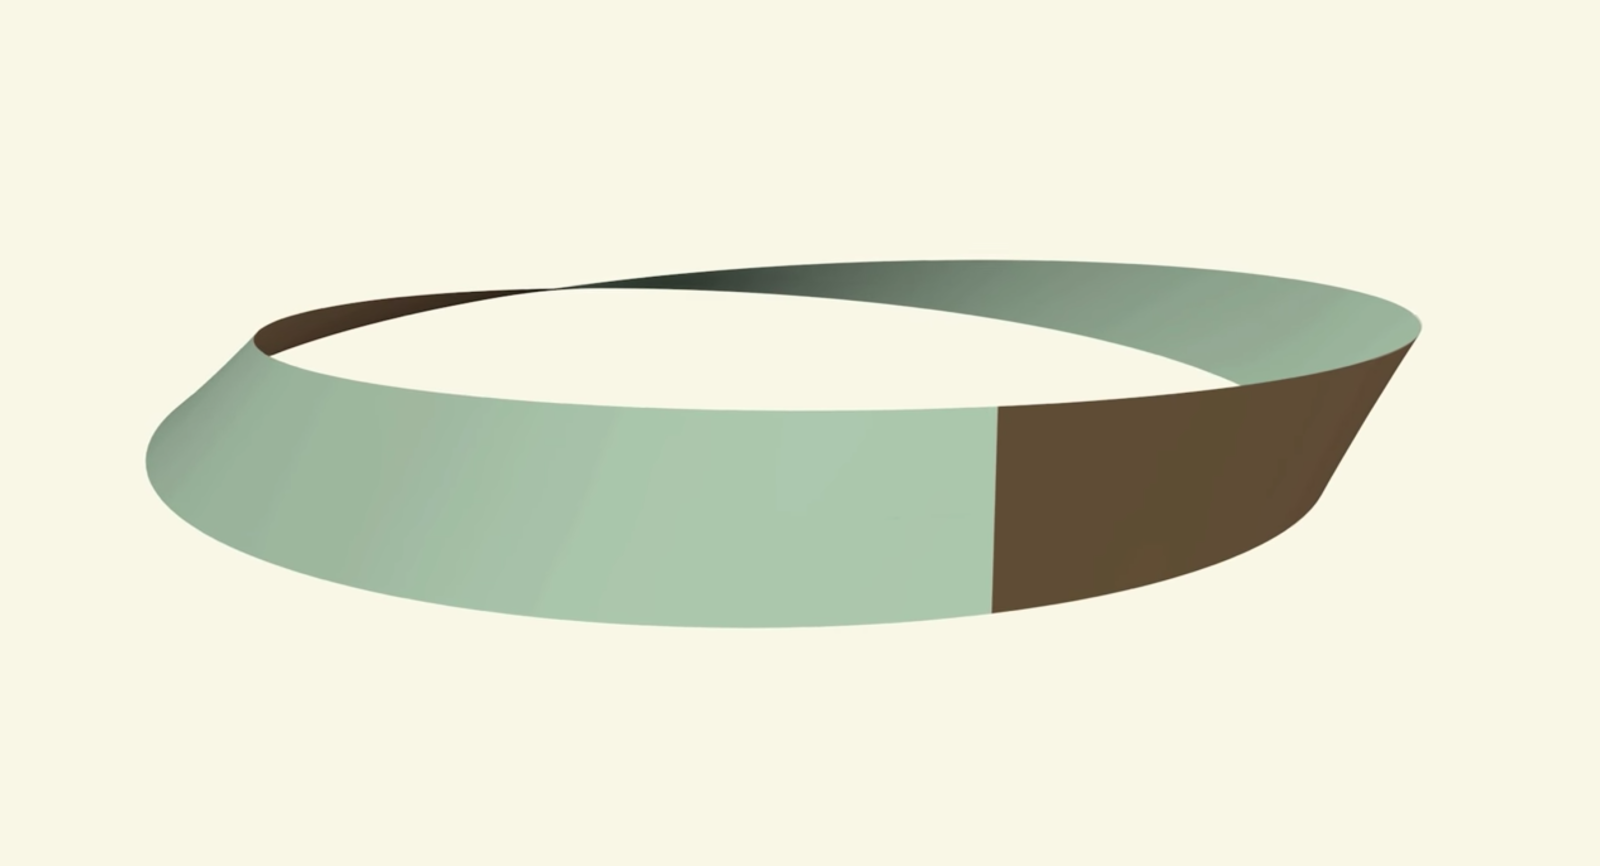 Animation - cutting a Möbius strip in half